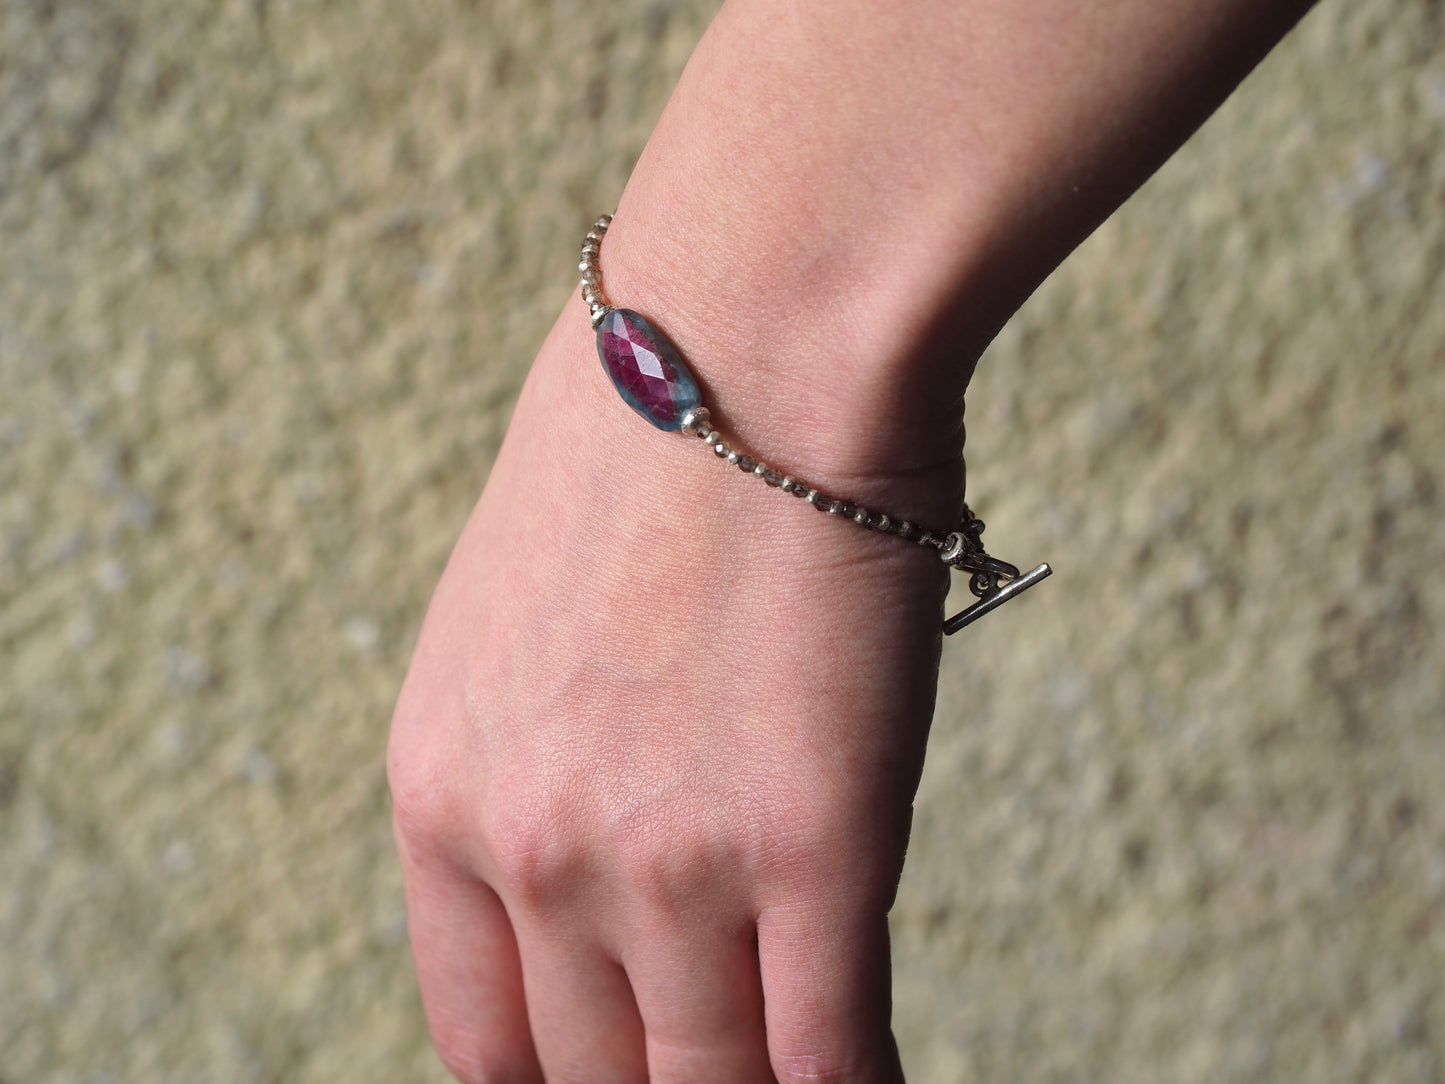 -Ruby in zoisite- smoky quartz・silver bracelet